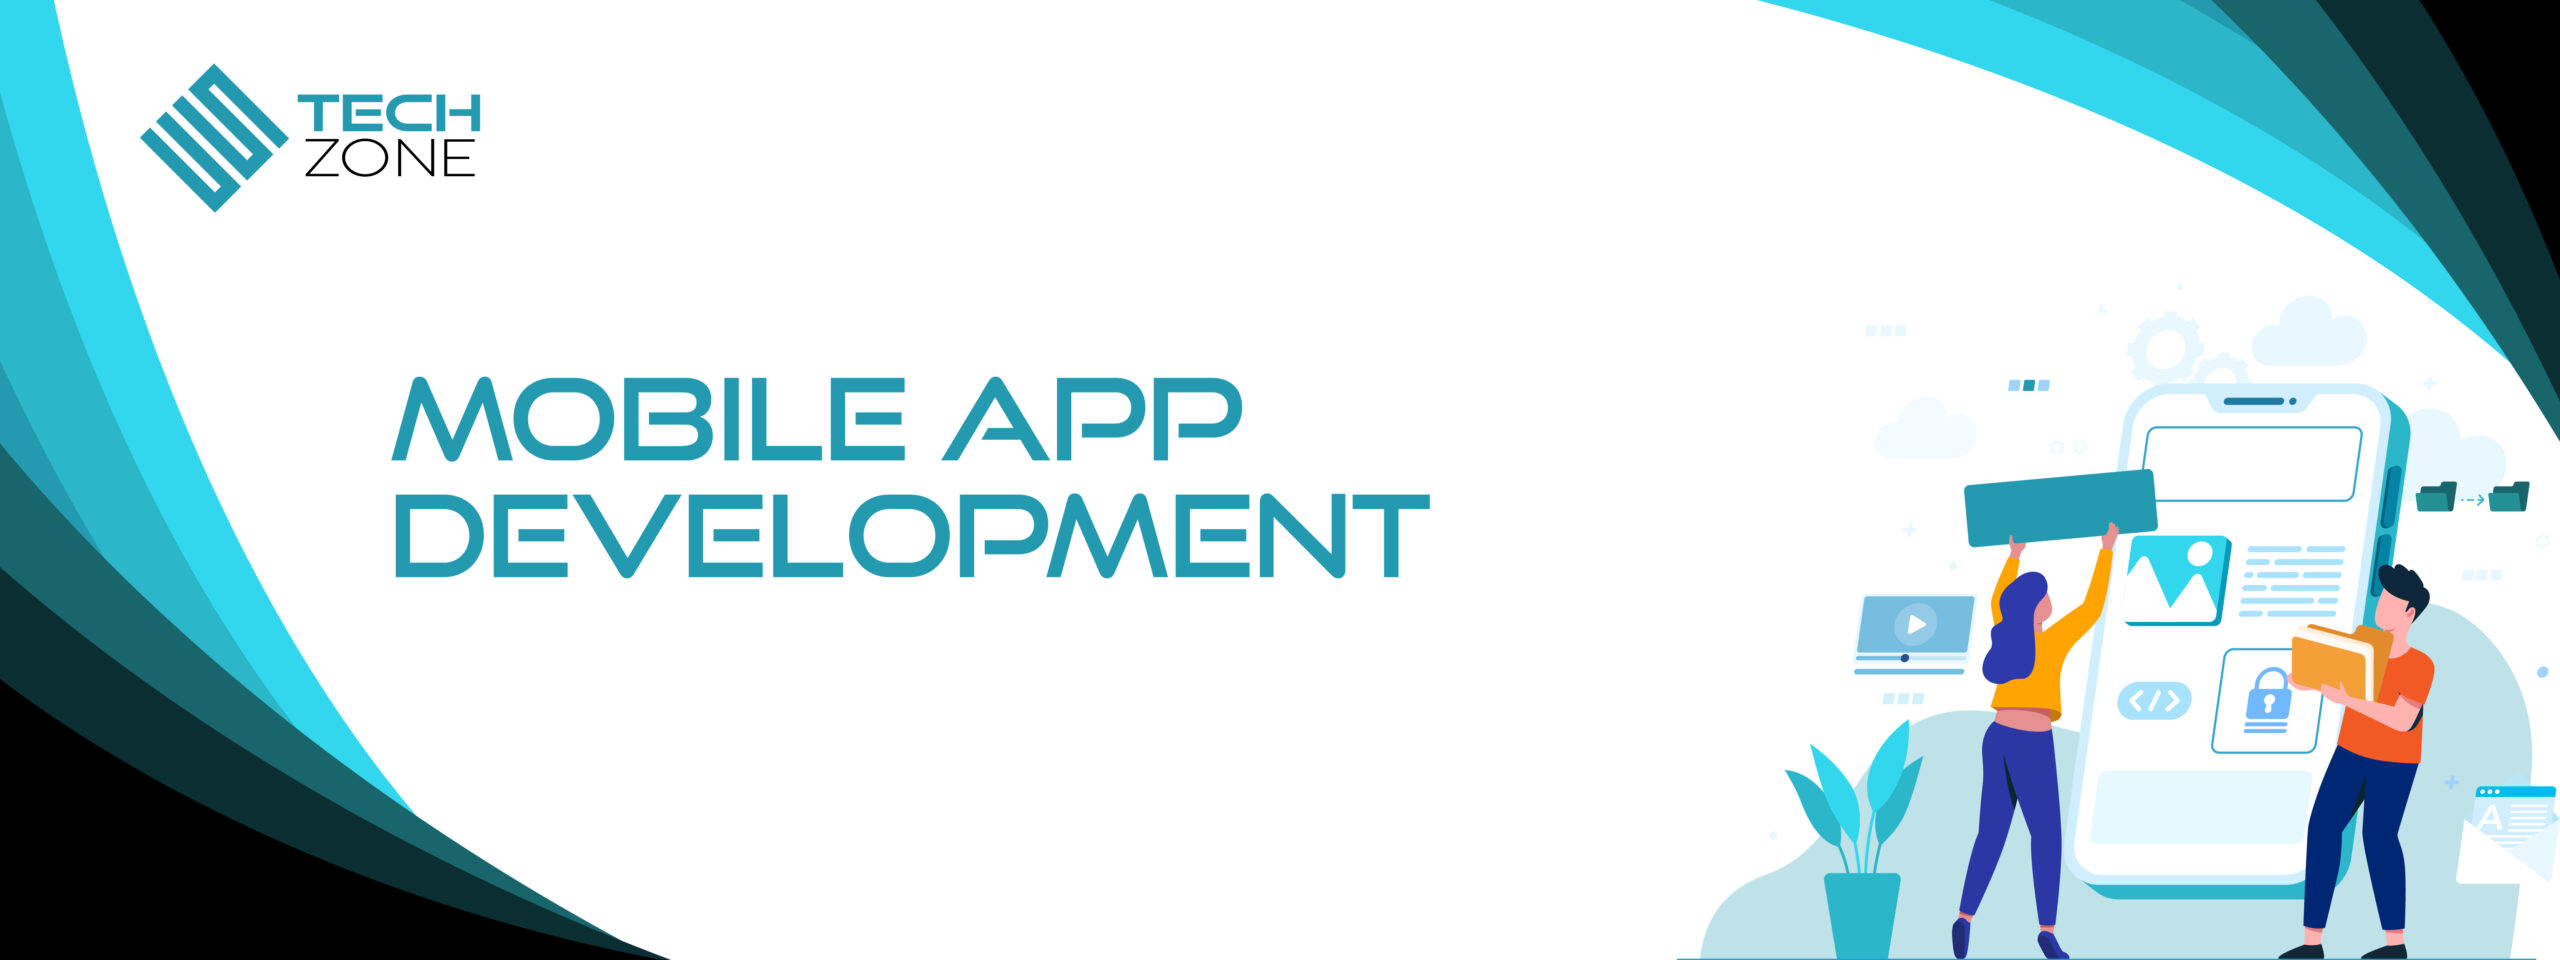 mobile-app-development-page-banner-us-tech-zone